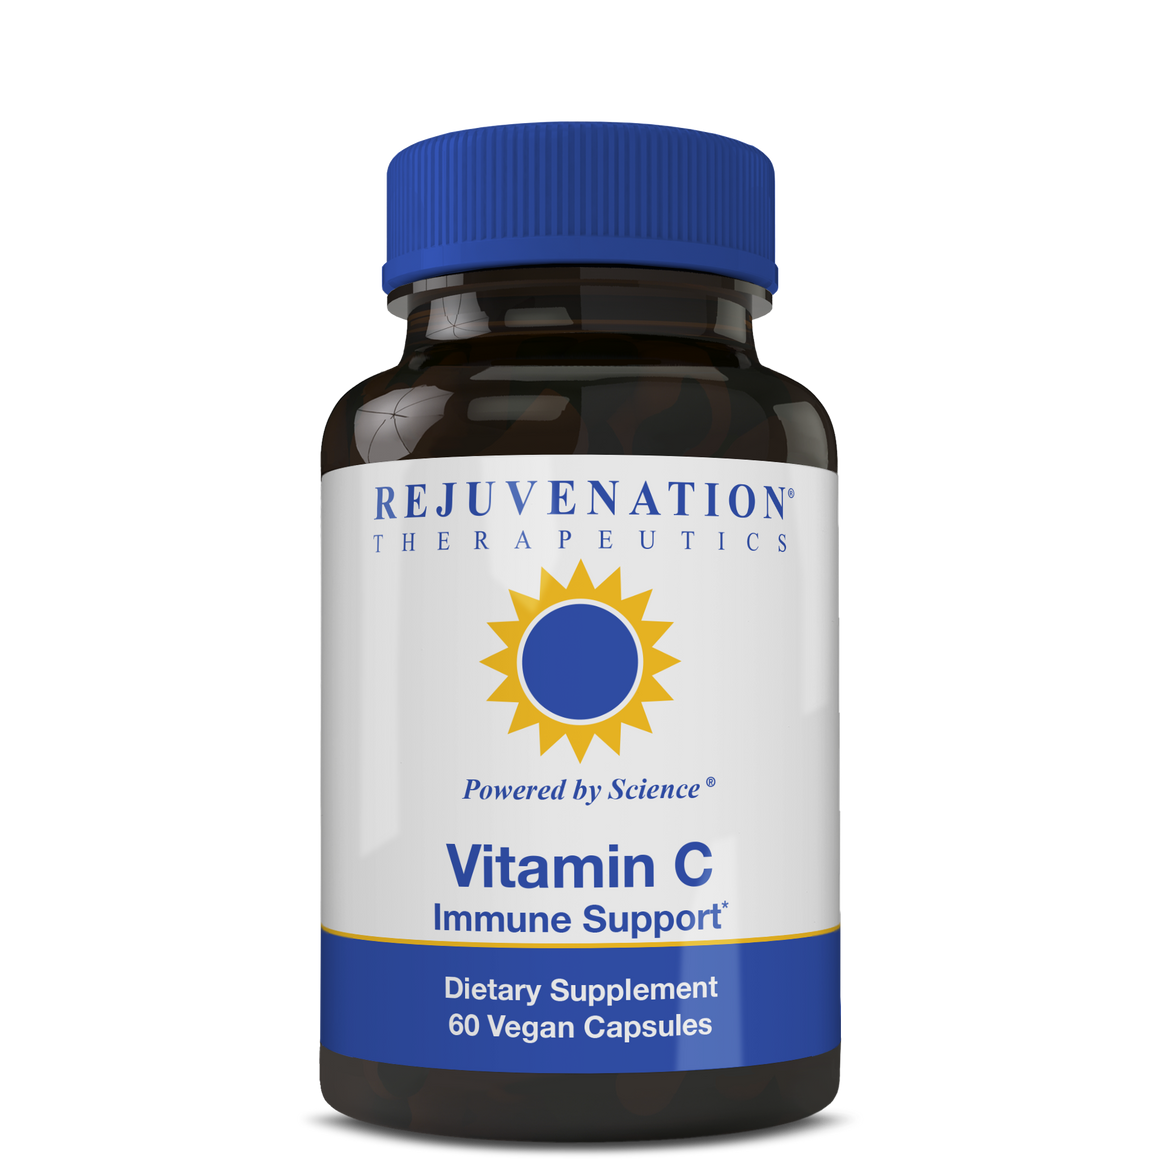 Vitamin C (500 mg, 60 Vegan Capsules) - Whole-Body Health Benefits, Non-GMO, Gluten-Free